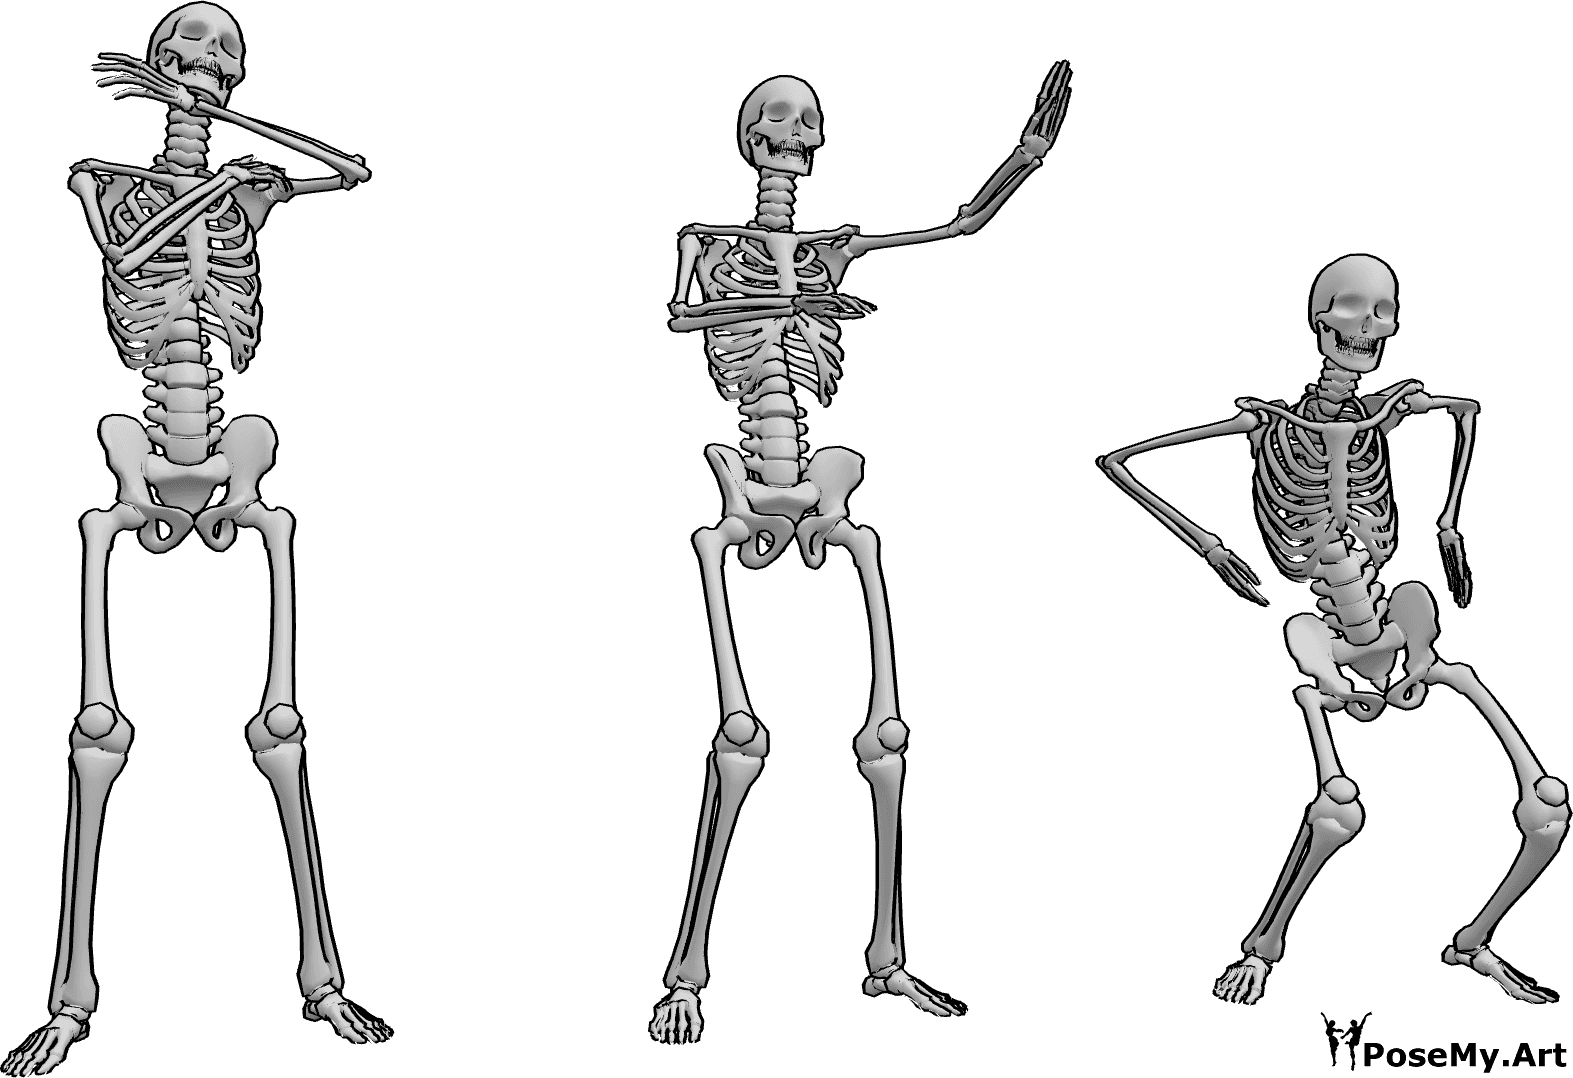 Pose Reference - Skeleton macarena pose - Three skeletons are dancing the macarena